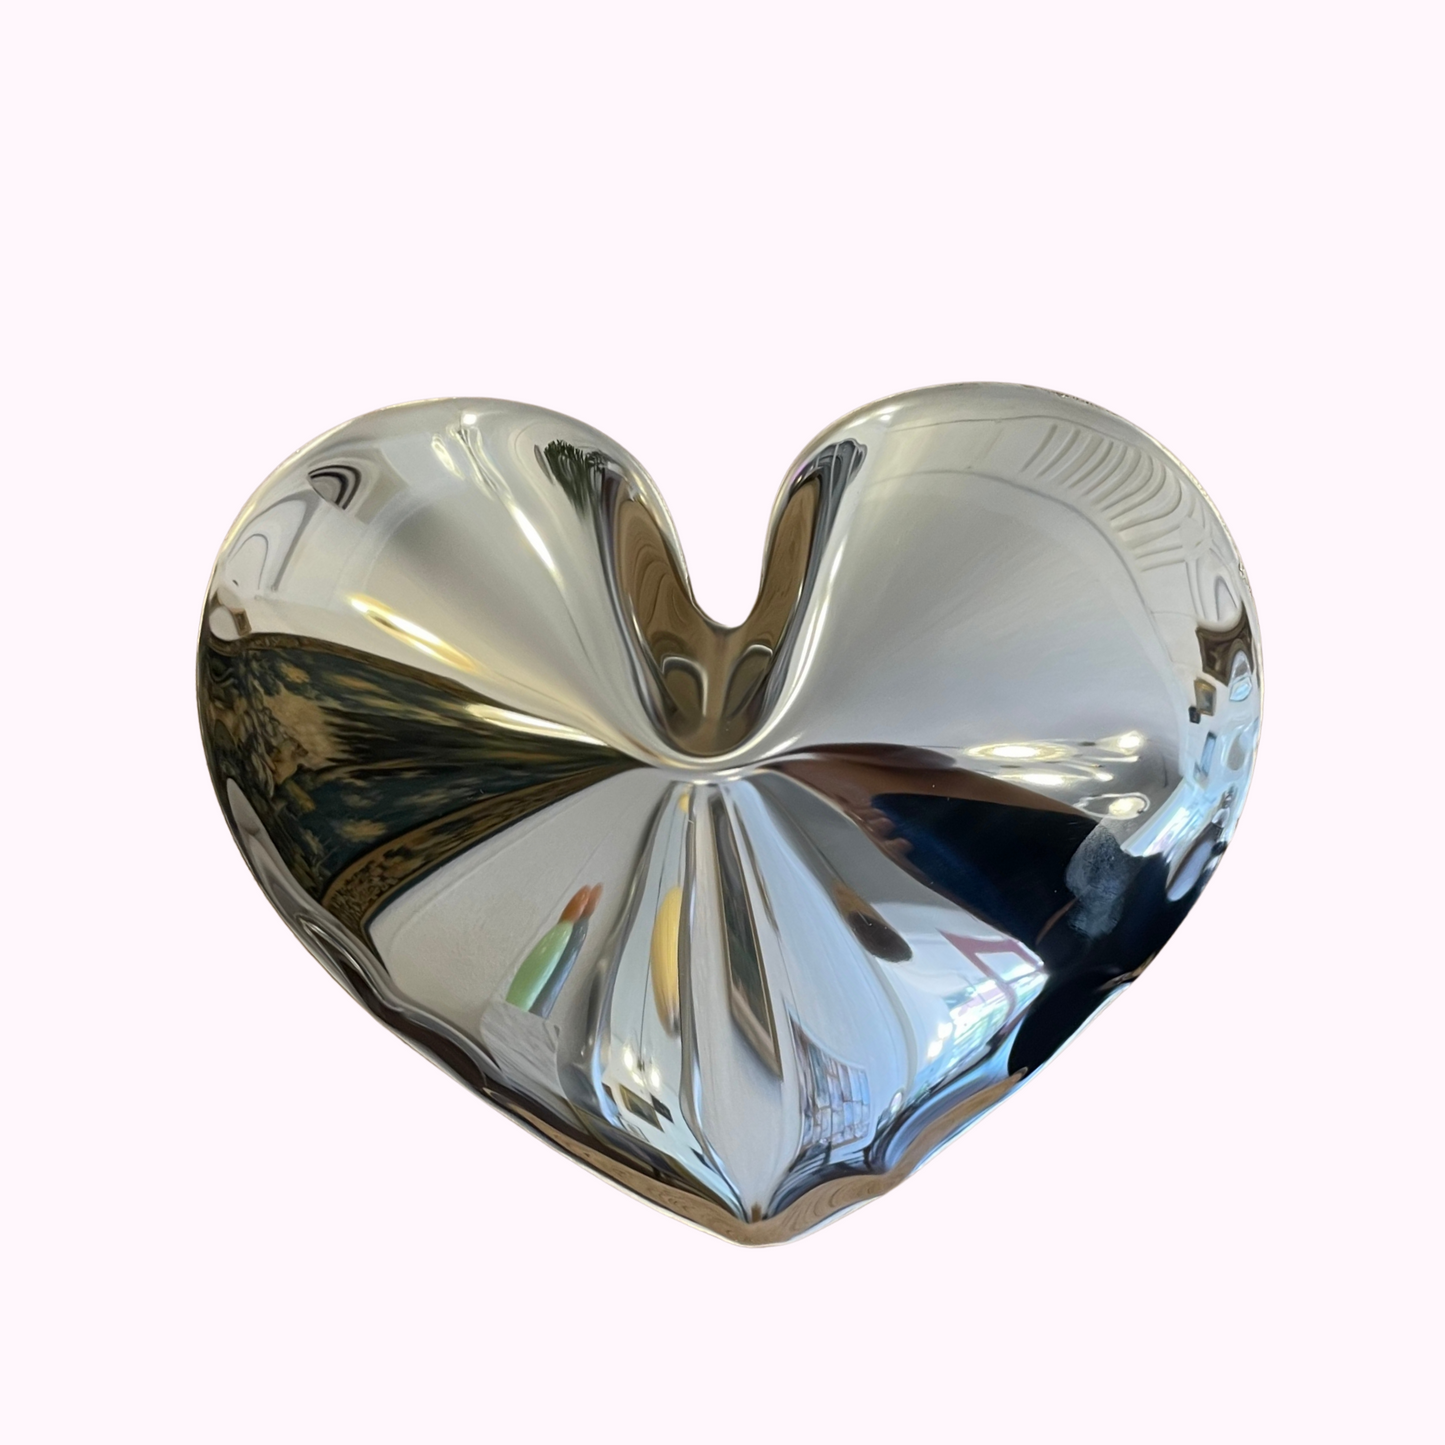 Puffy Heart steel sculpture by Duzi Objects